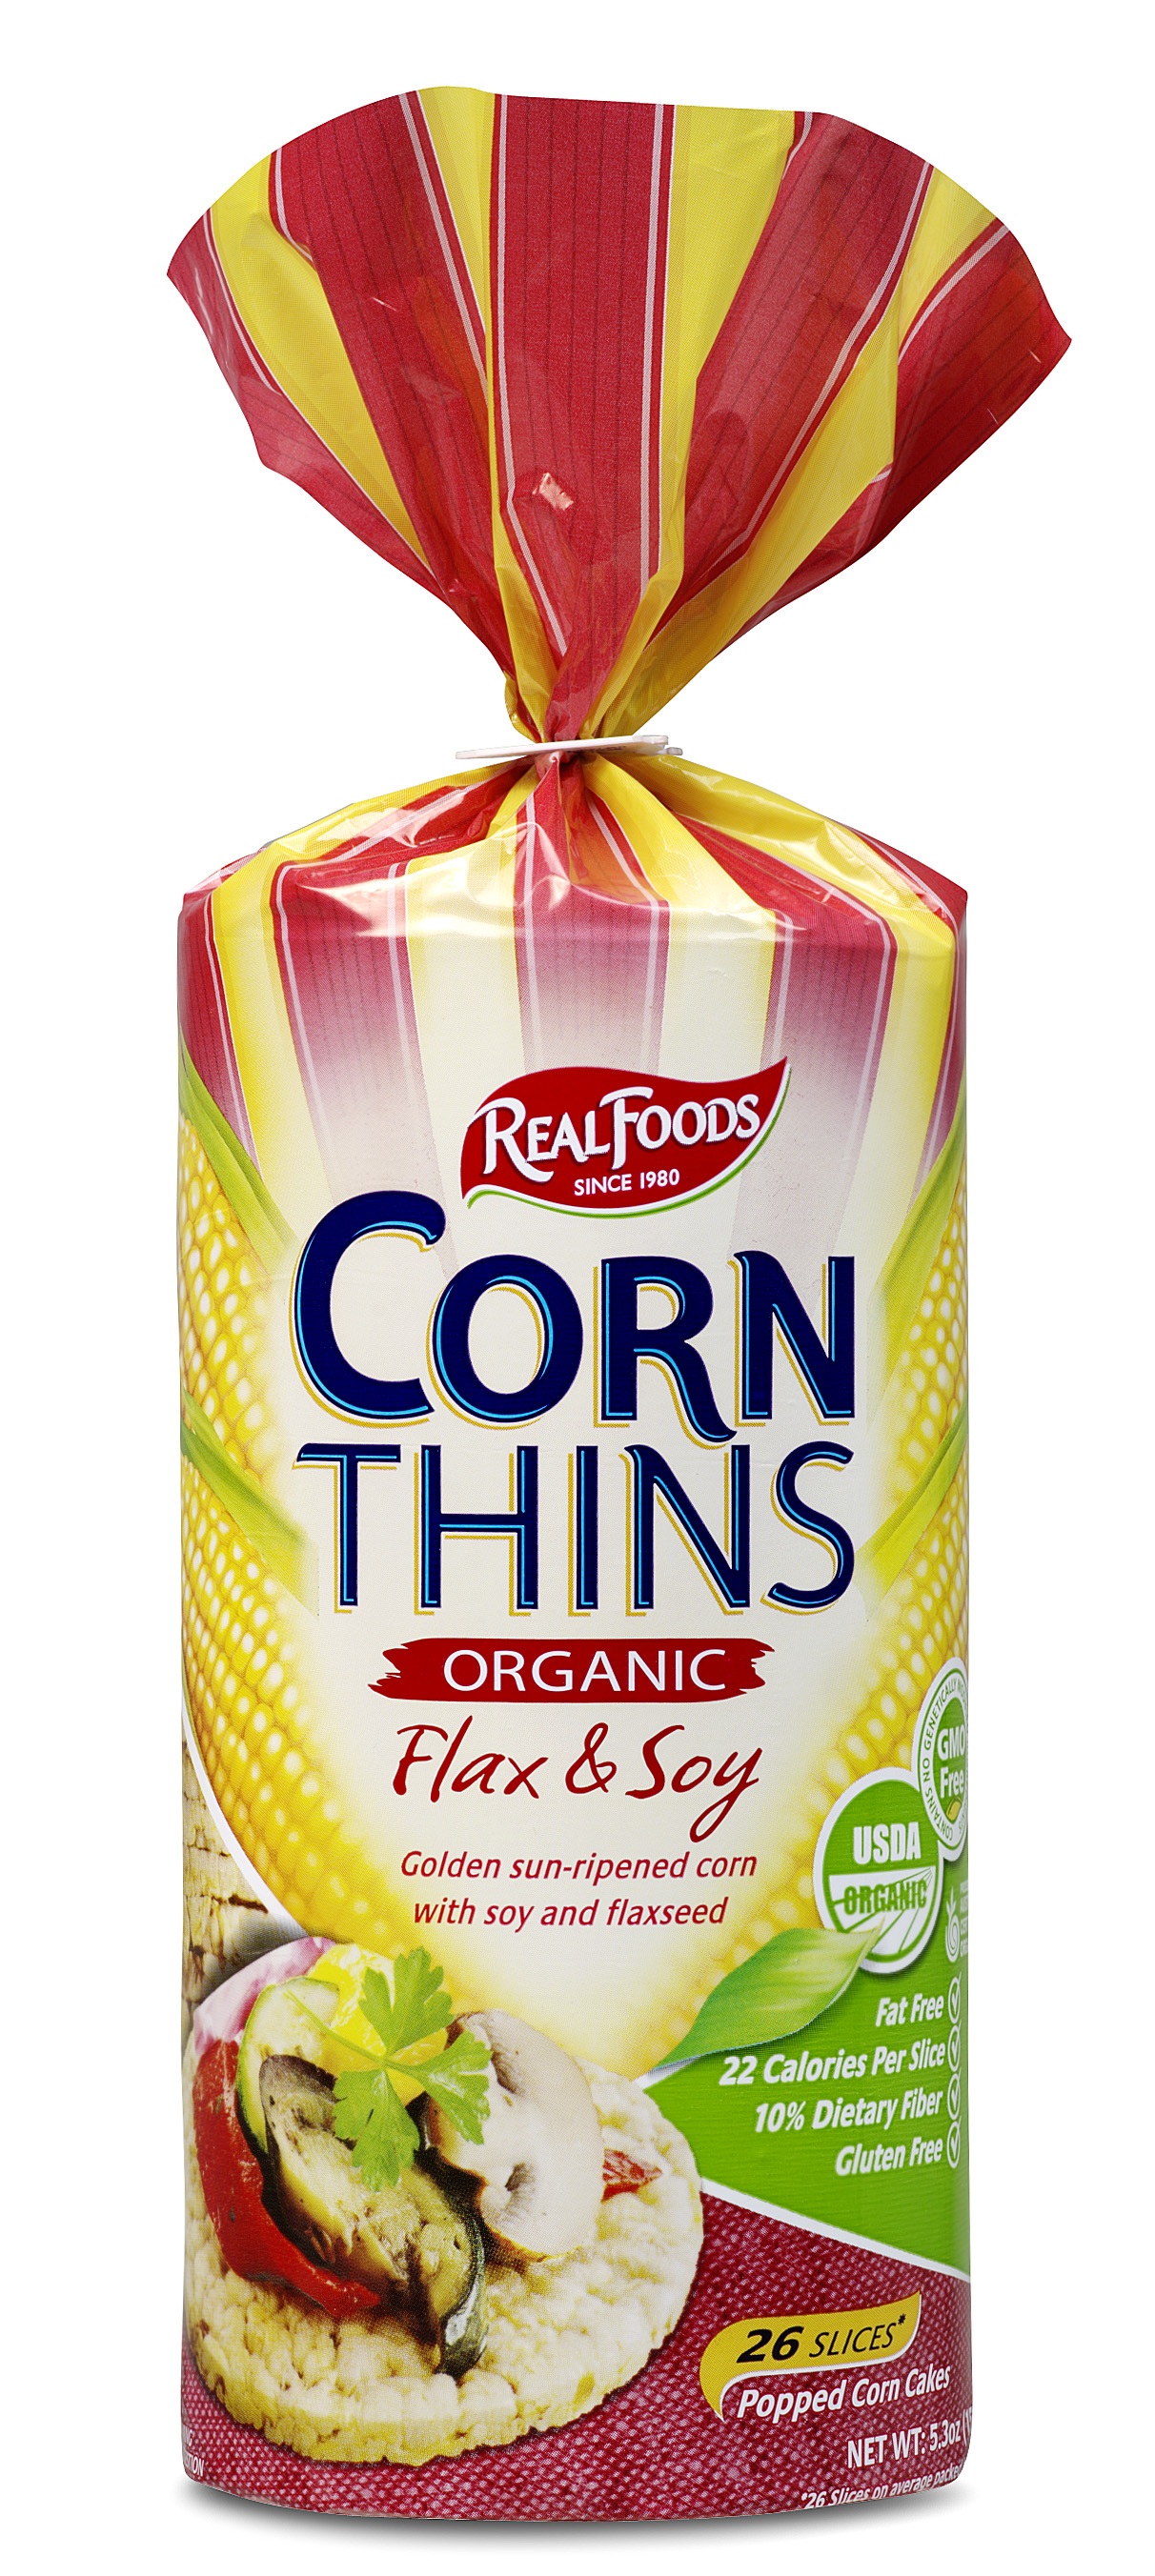 Flax & Soy Corn Thins